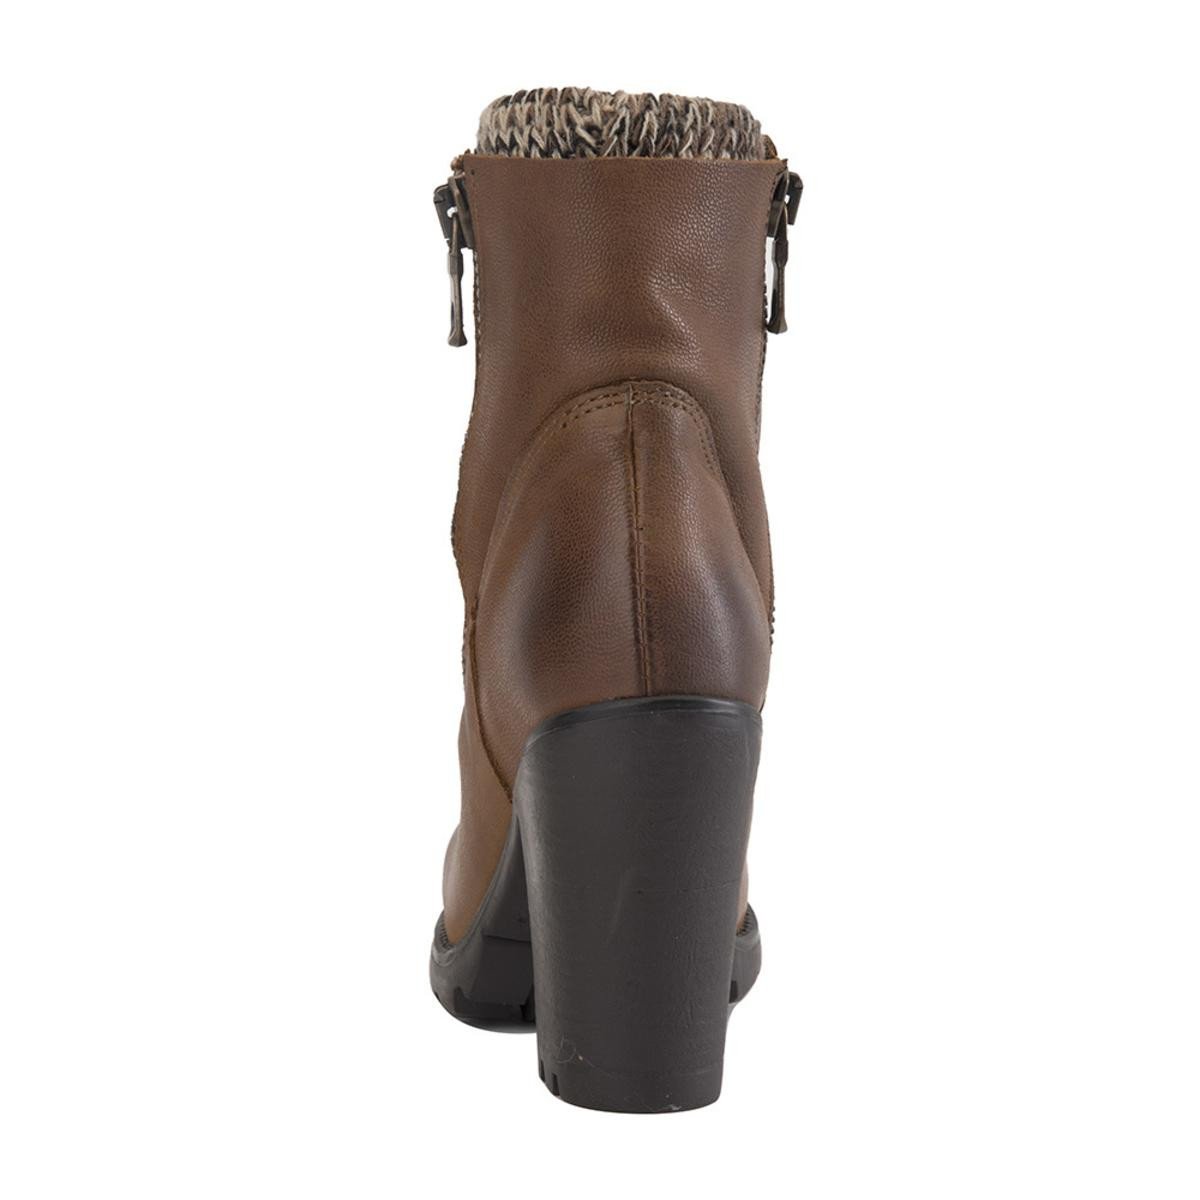 Steve Madden for Women: Sweaterr Cognac Leather Heel Boots